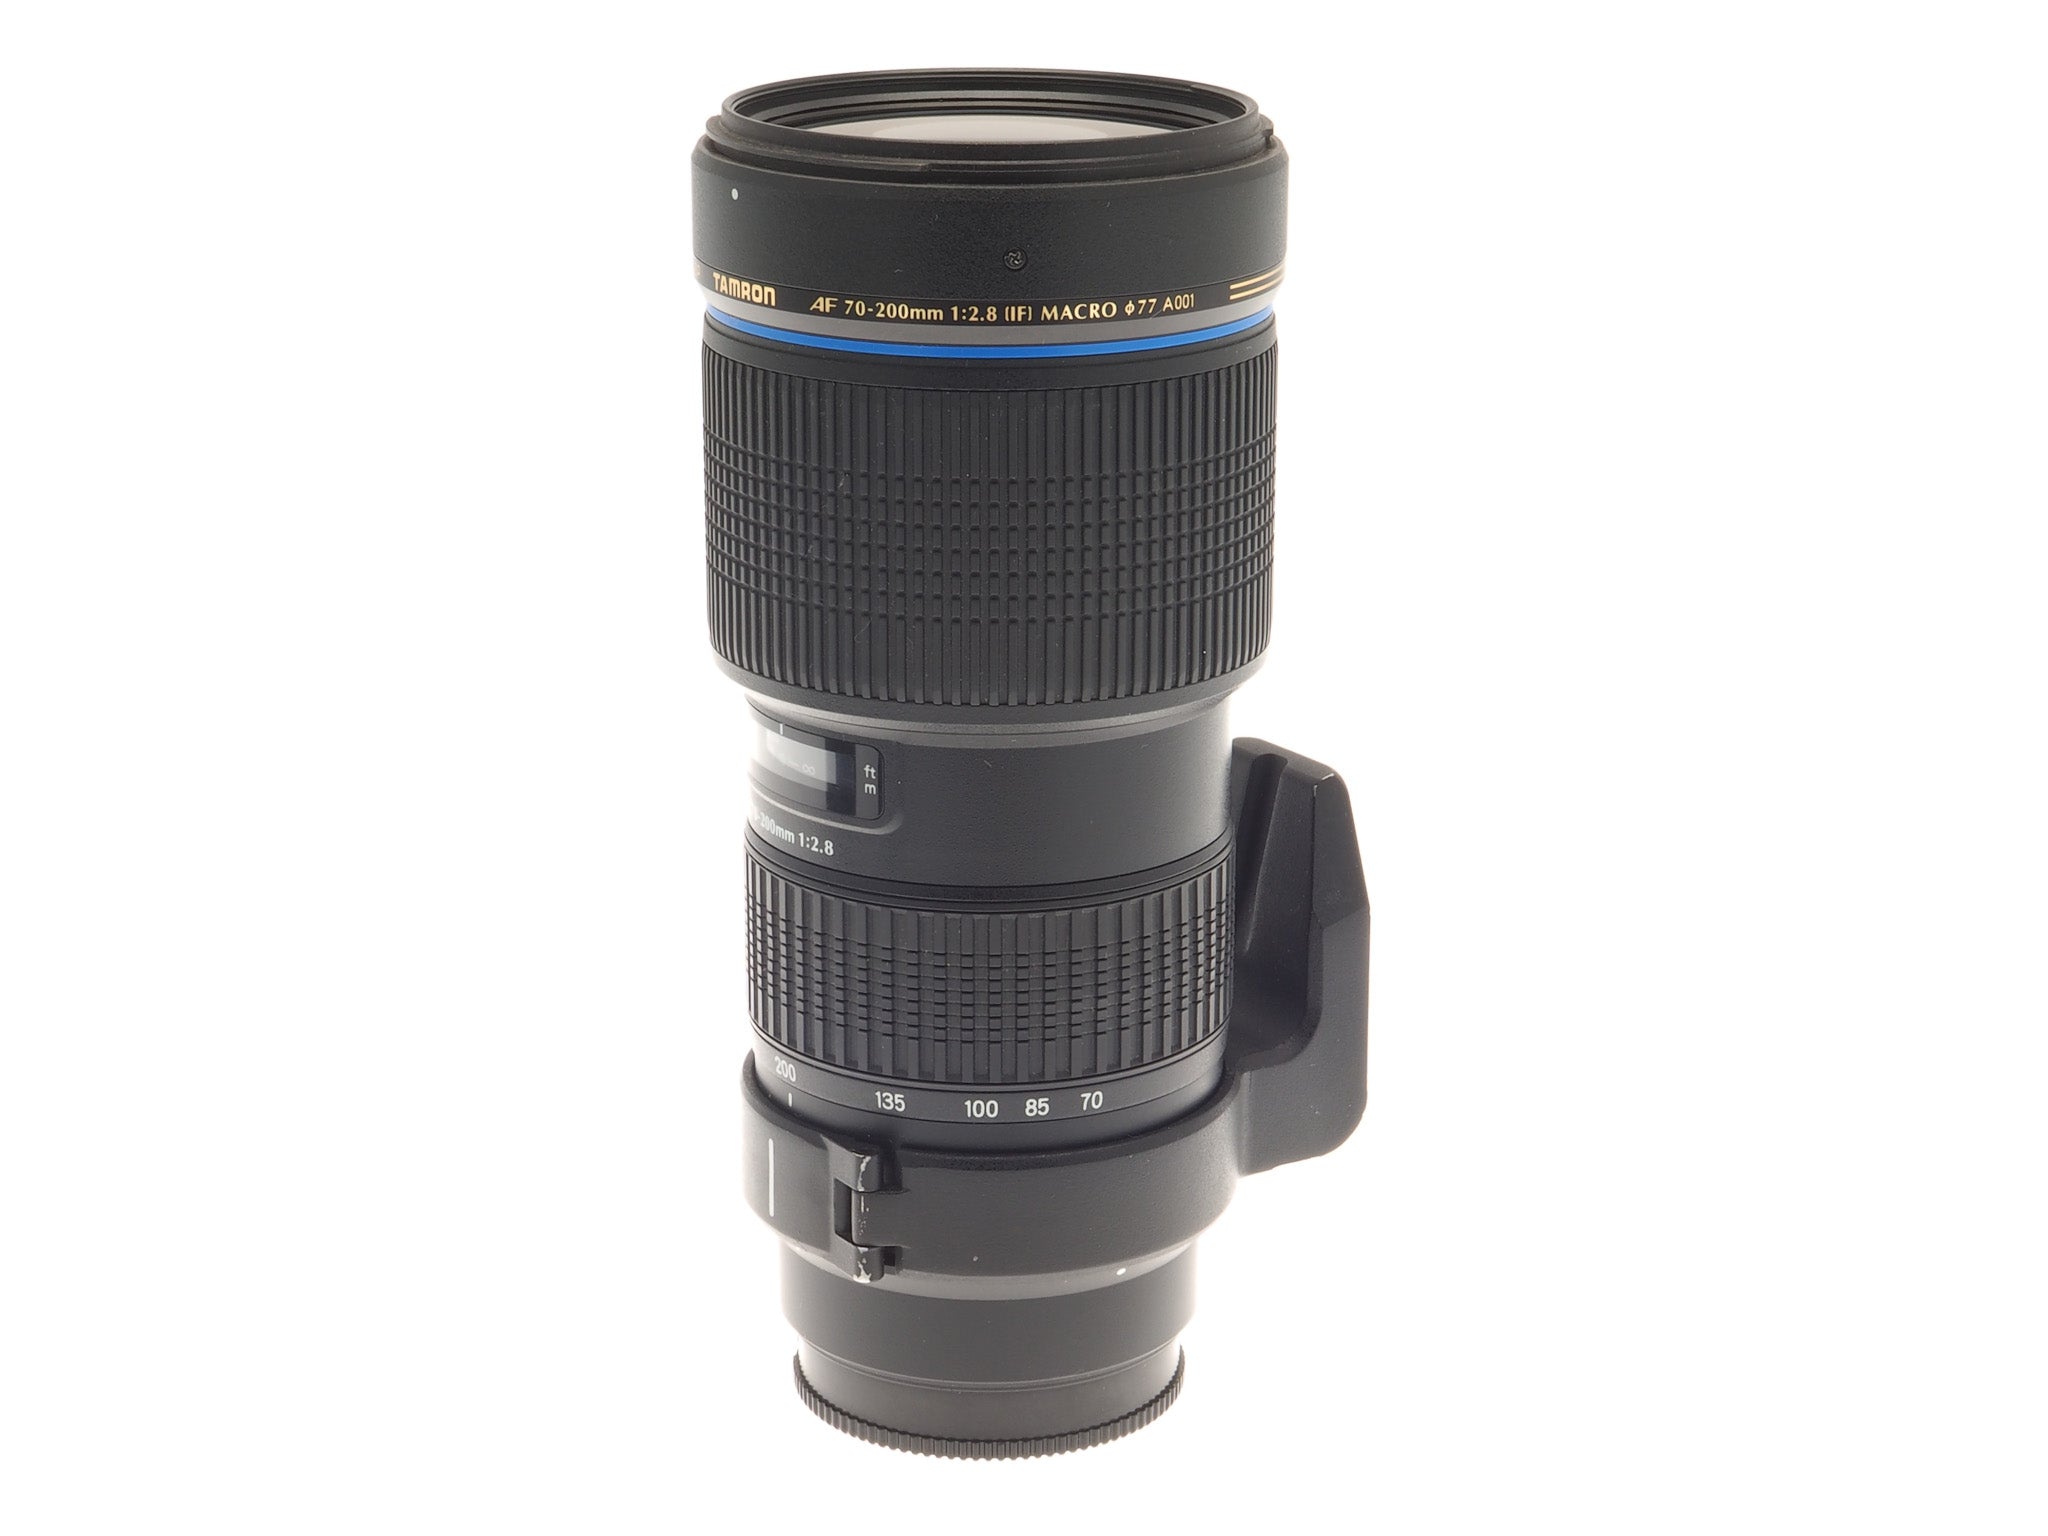 Tamron 70-200mm f2.8 LD Di SP AF (IF) Macro (A001) - Lens